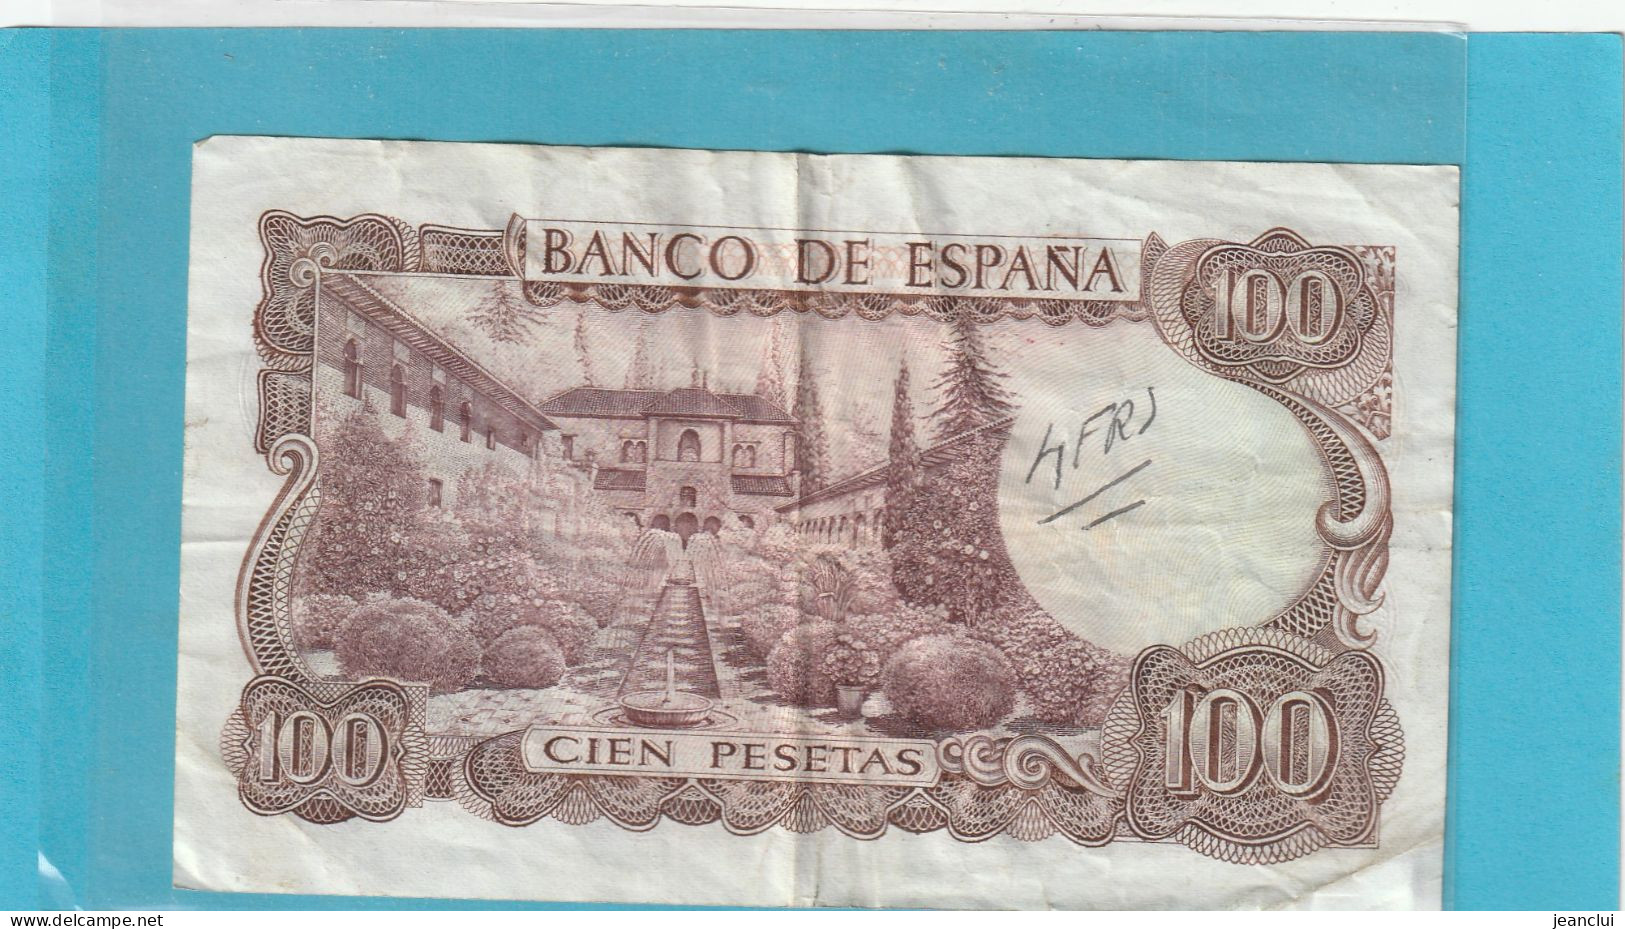 EL BANCO DE ESPANA  .  100 PESETAS  .  17-11-1970  .  N°  6V 6385742 .  2 SCANNES  .  BILLET USITE - 100 Pesetas